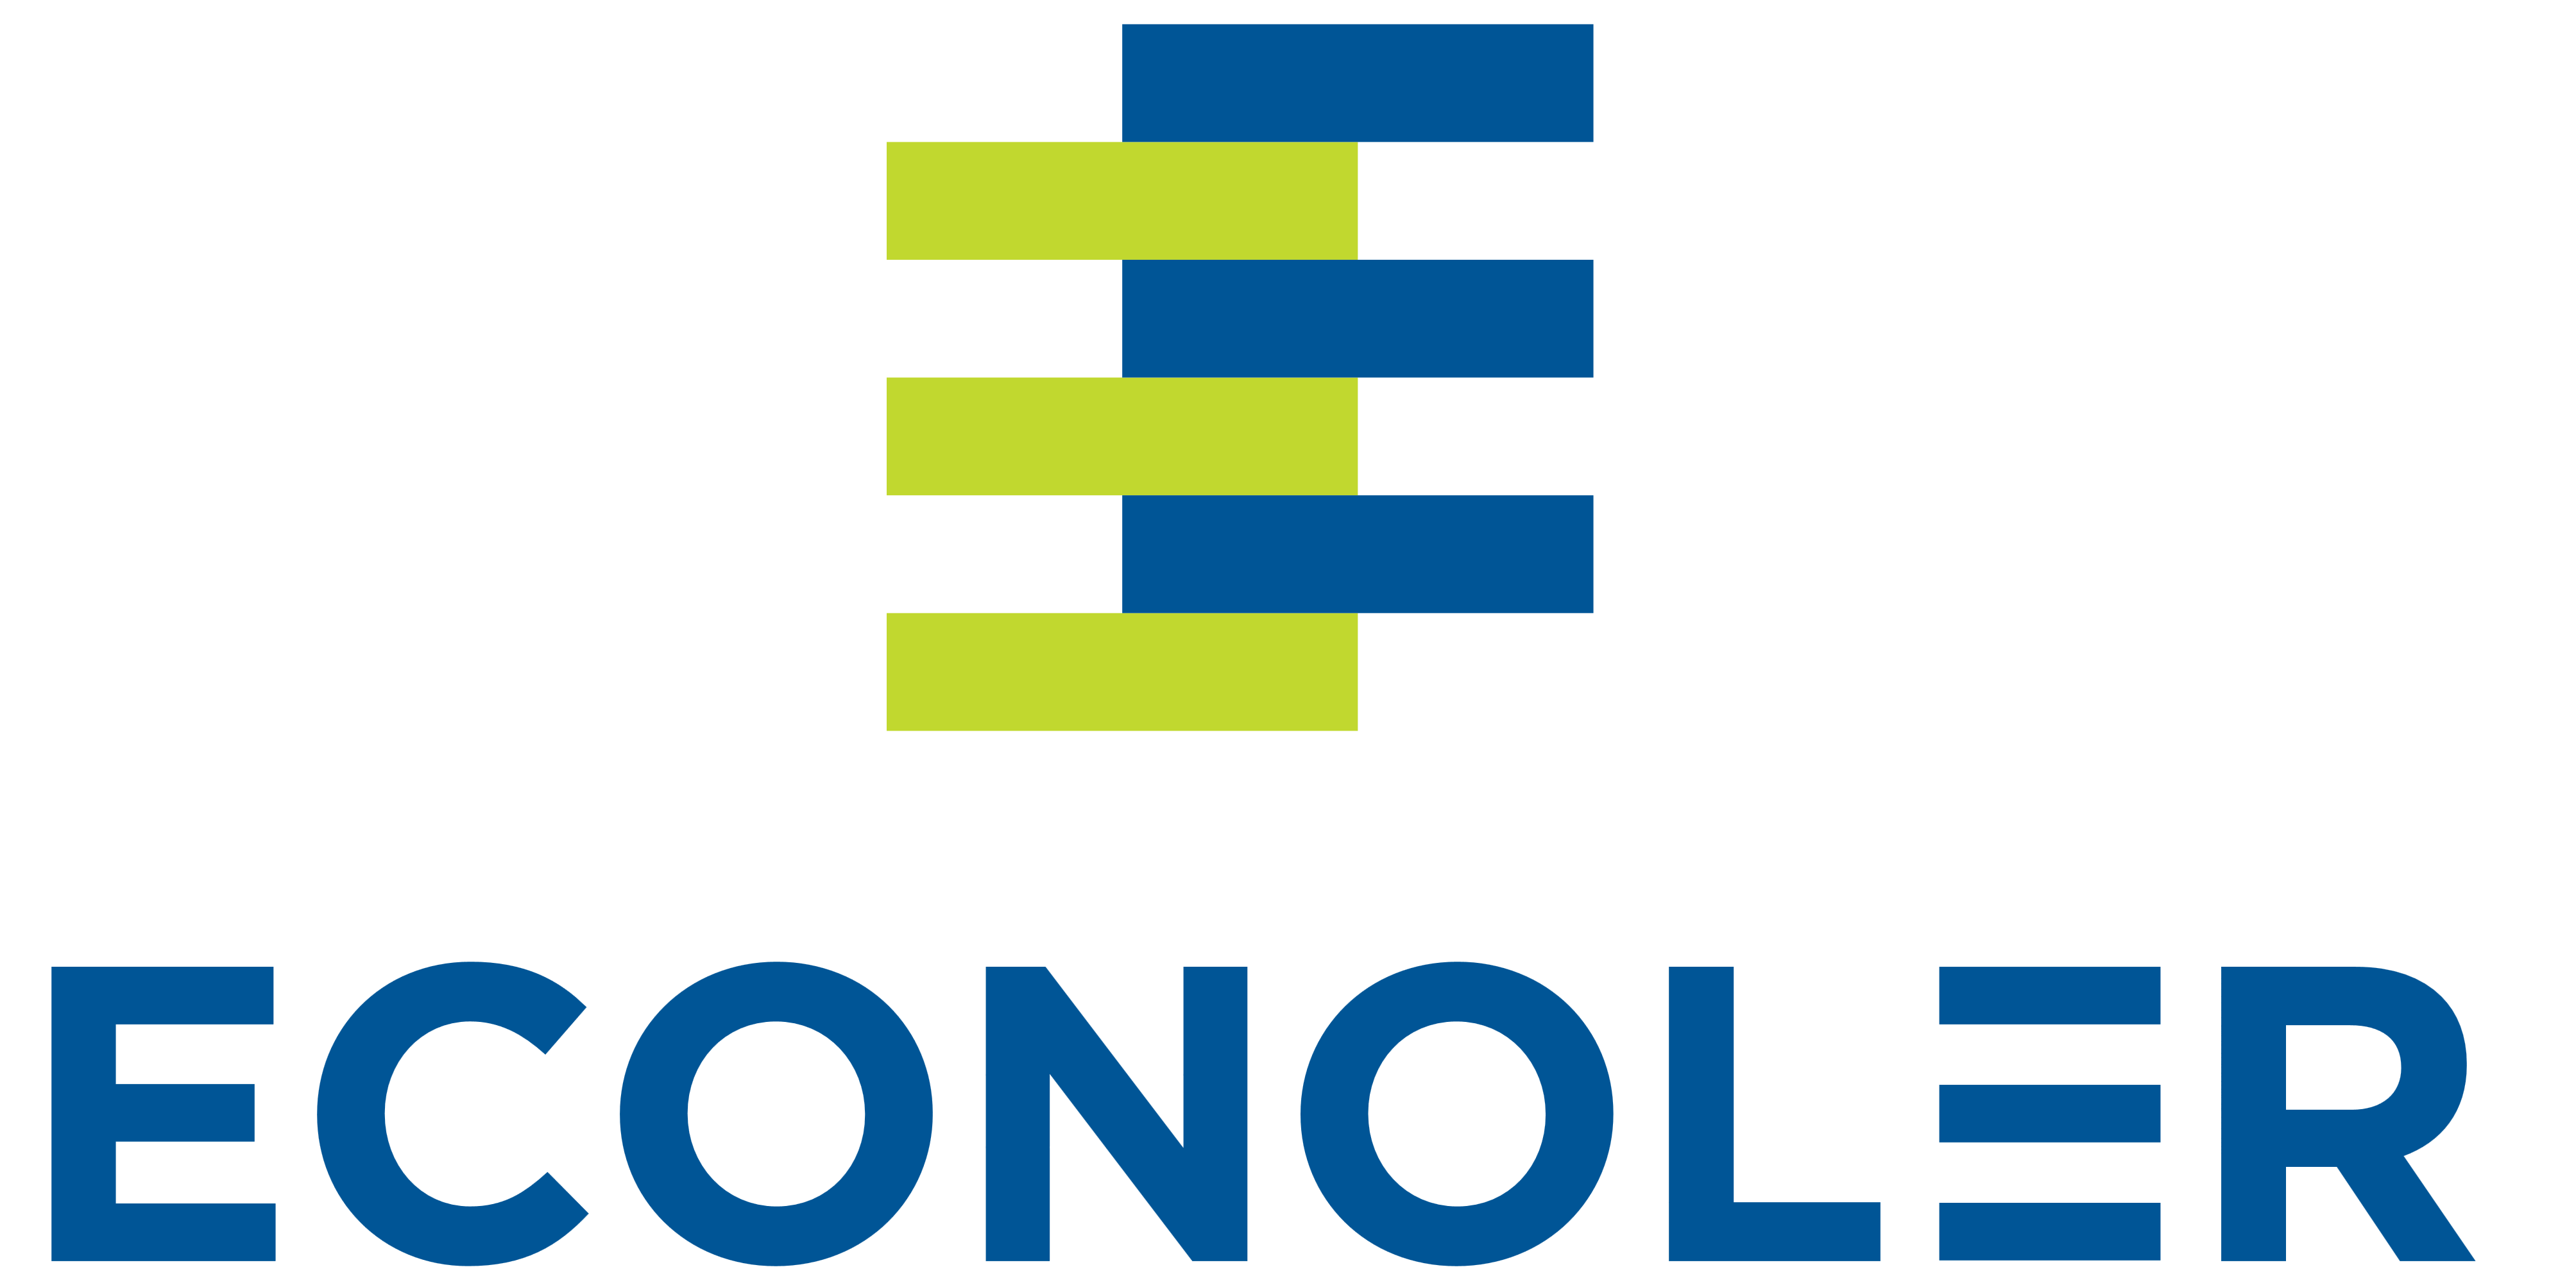 Econoler logo, logotype